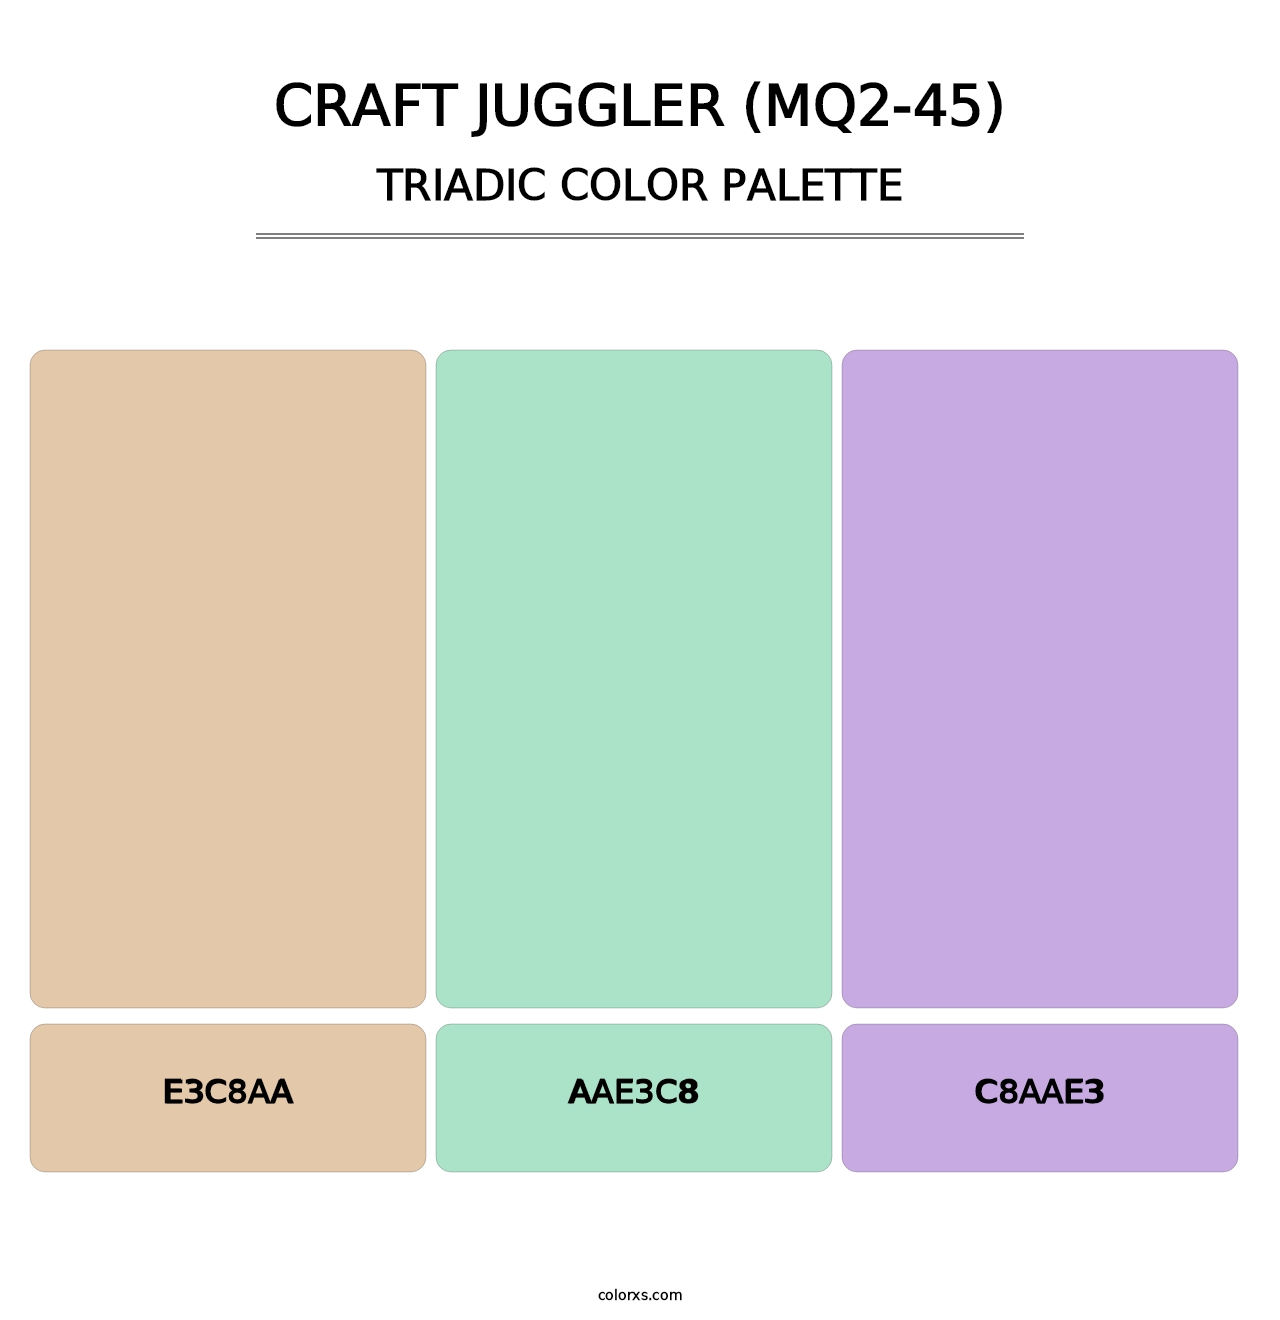 Craft Juggler (MQ2-45) - Triadic Color Palette